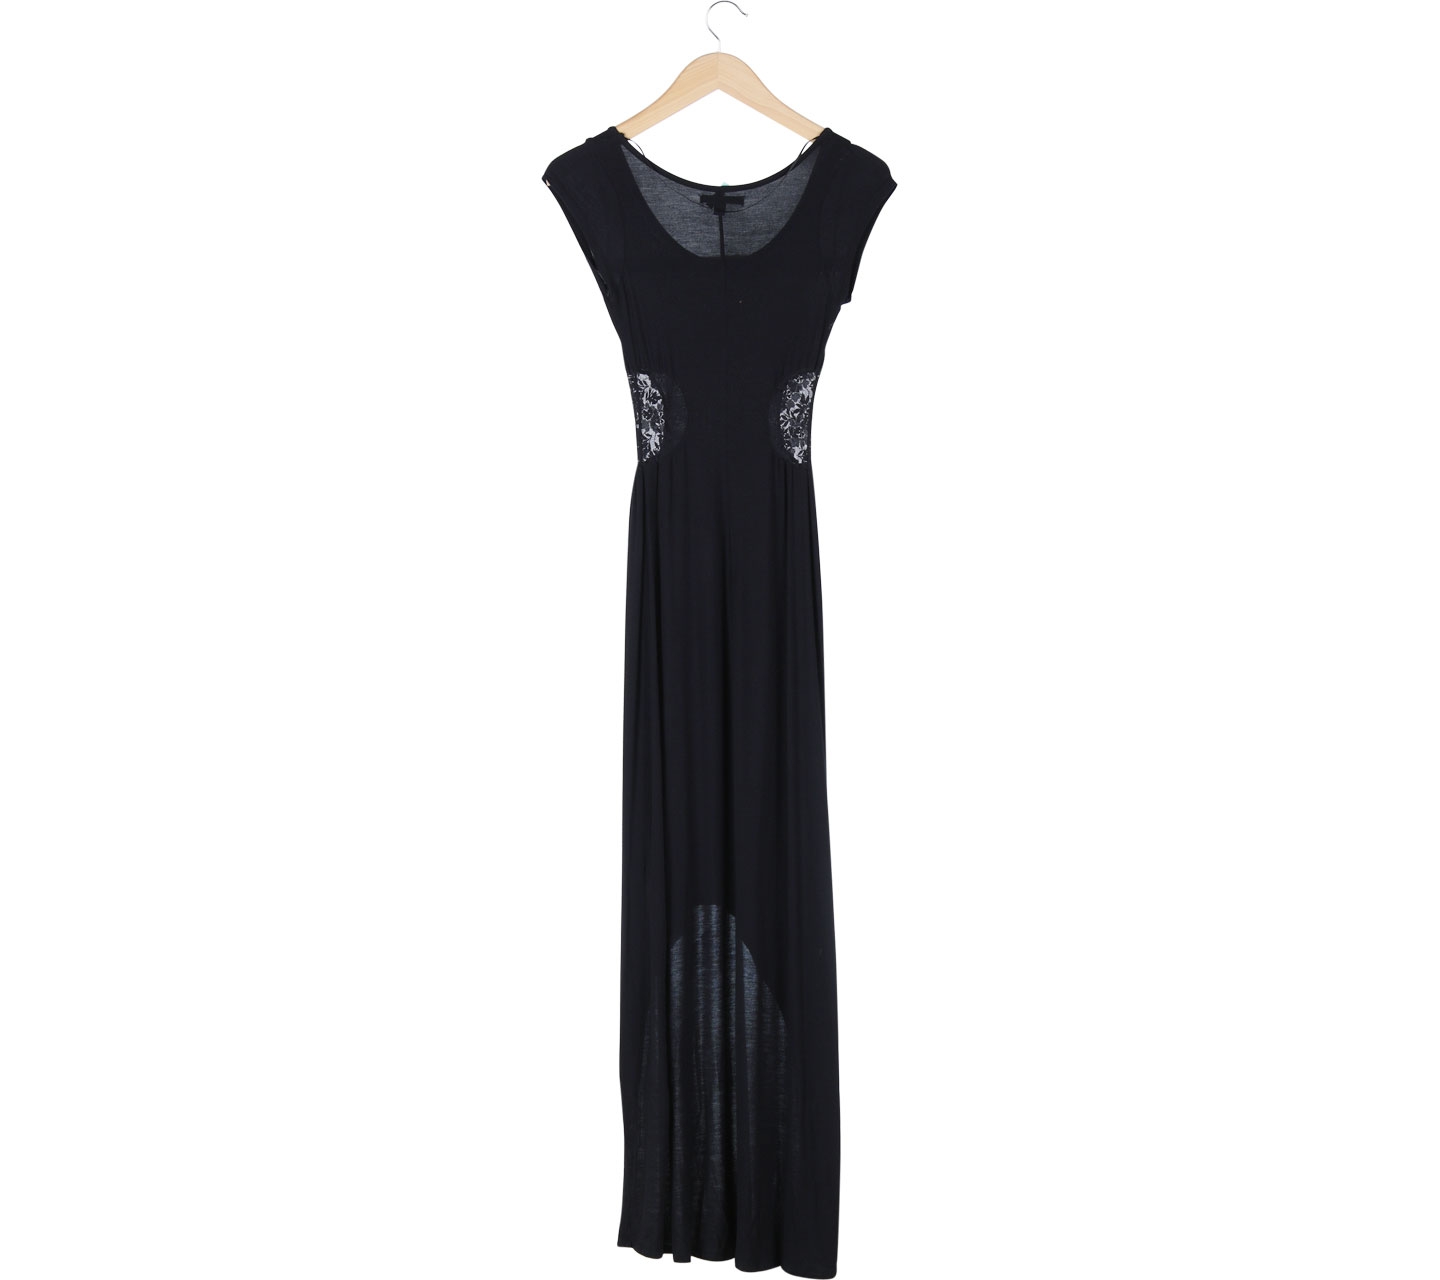 Zara Black Lace Insert Long Dress